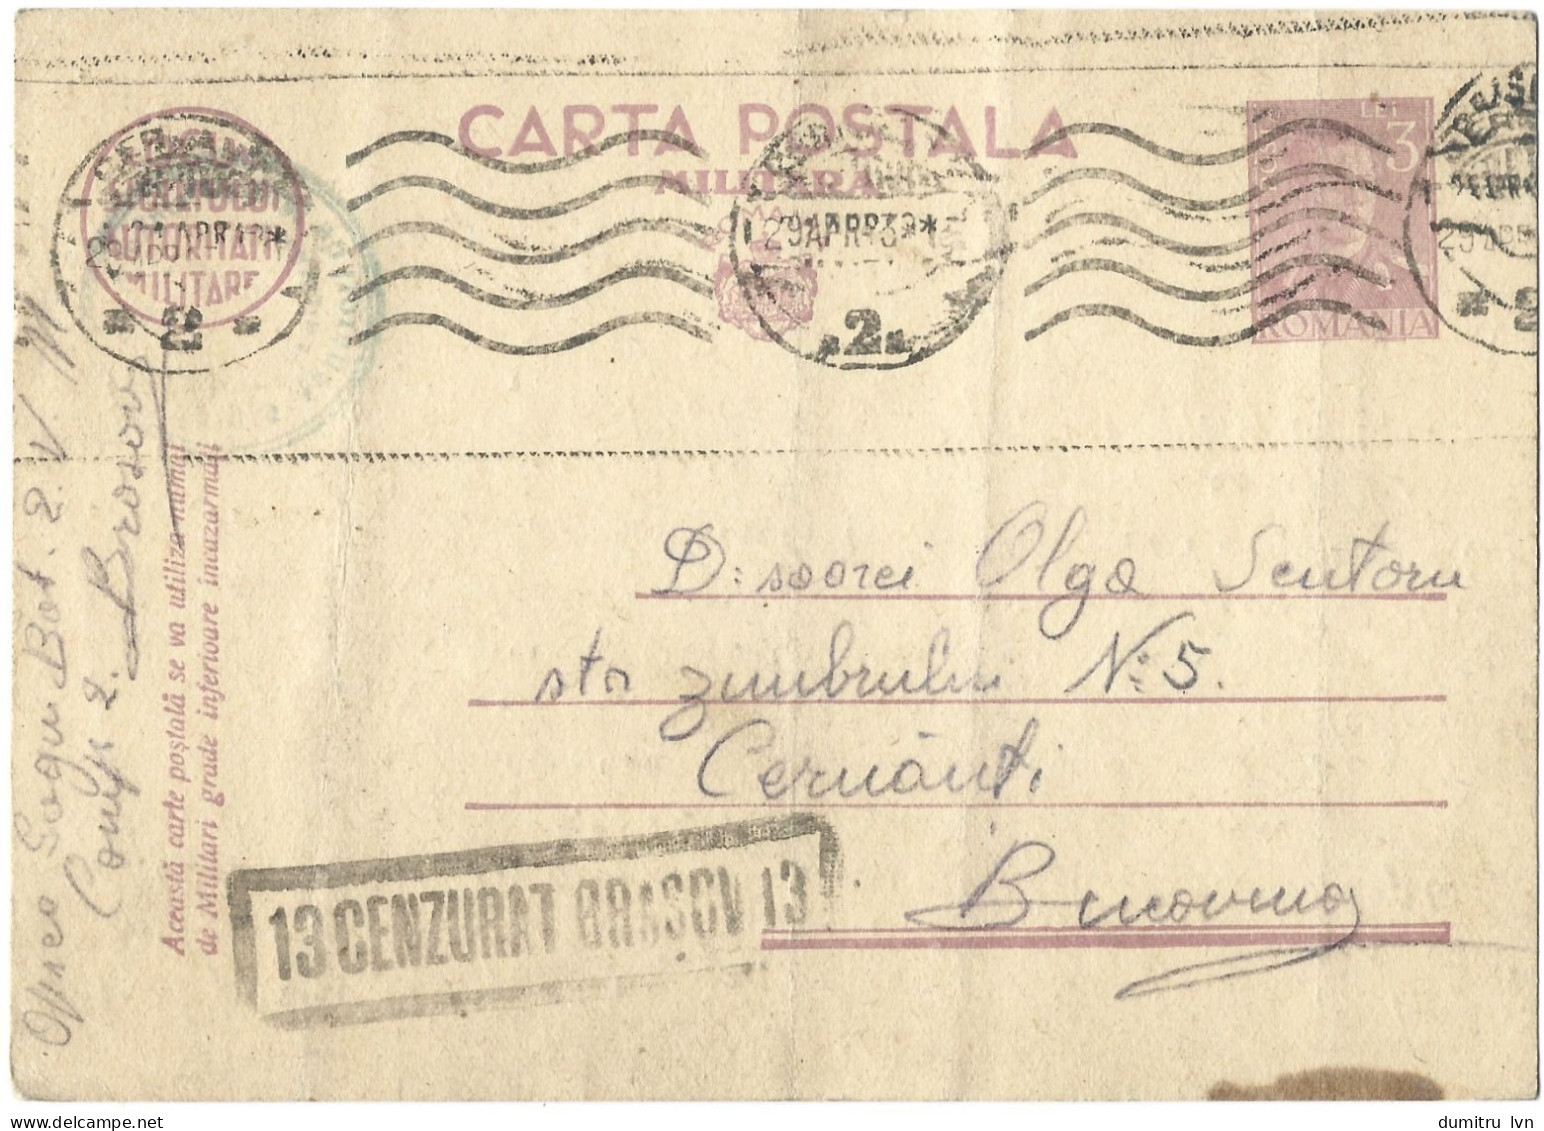 ROMANIA 1943 MILITARY POSTCARD, MILITARY CENSORED, CENSORED BRASOV 13, CERNAUTI STAMP, POSTCARD STATIONERY - Cartas De La Segunda Guerra Mundial